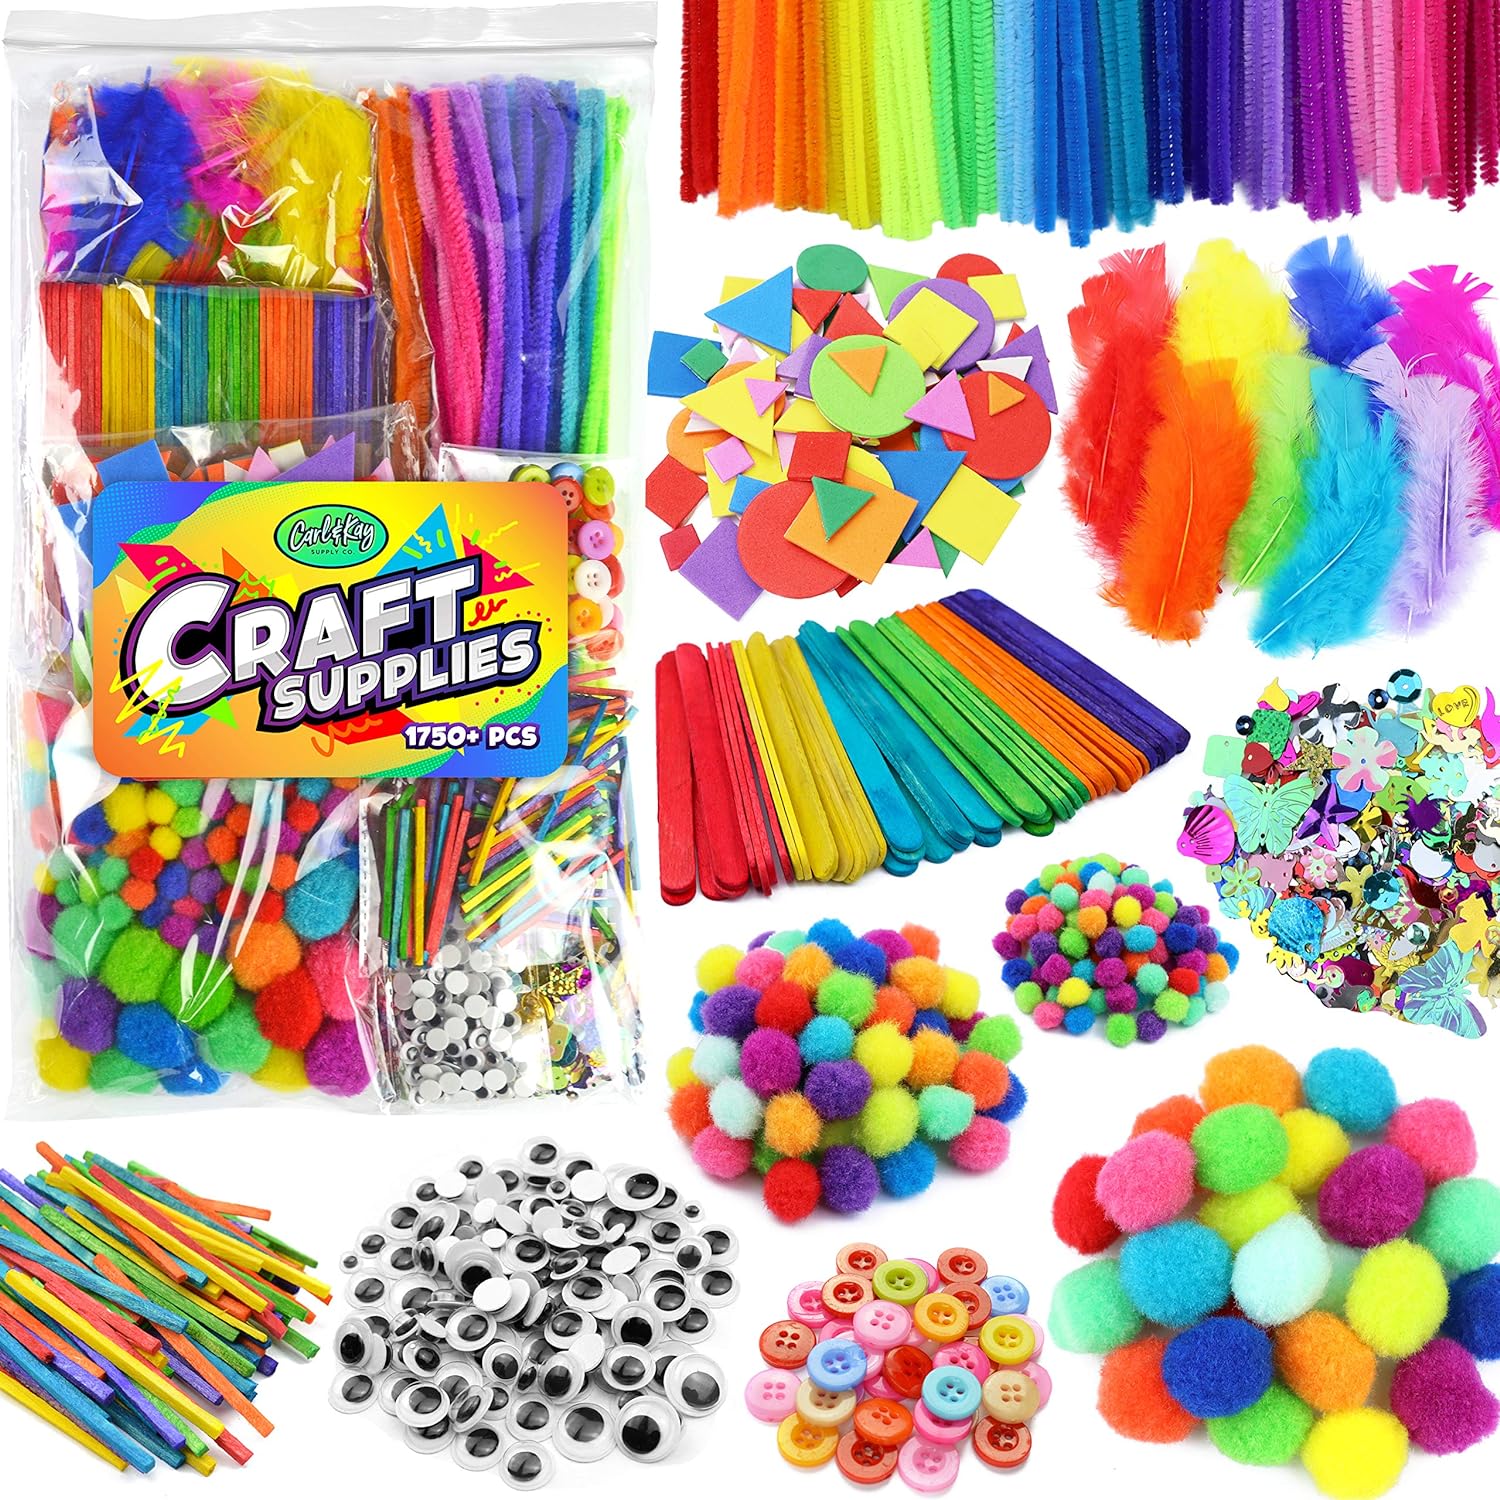 Craft supplies for kids